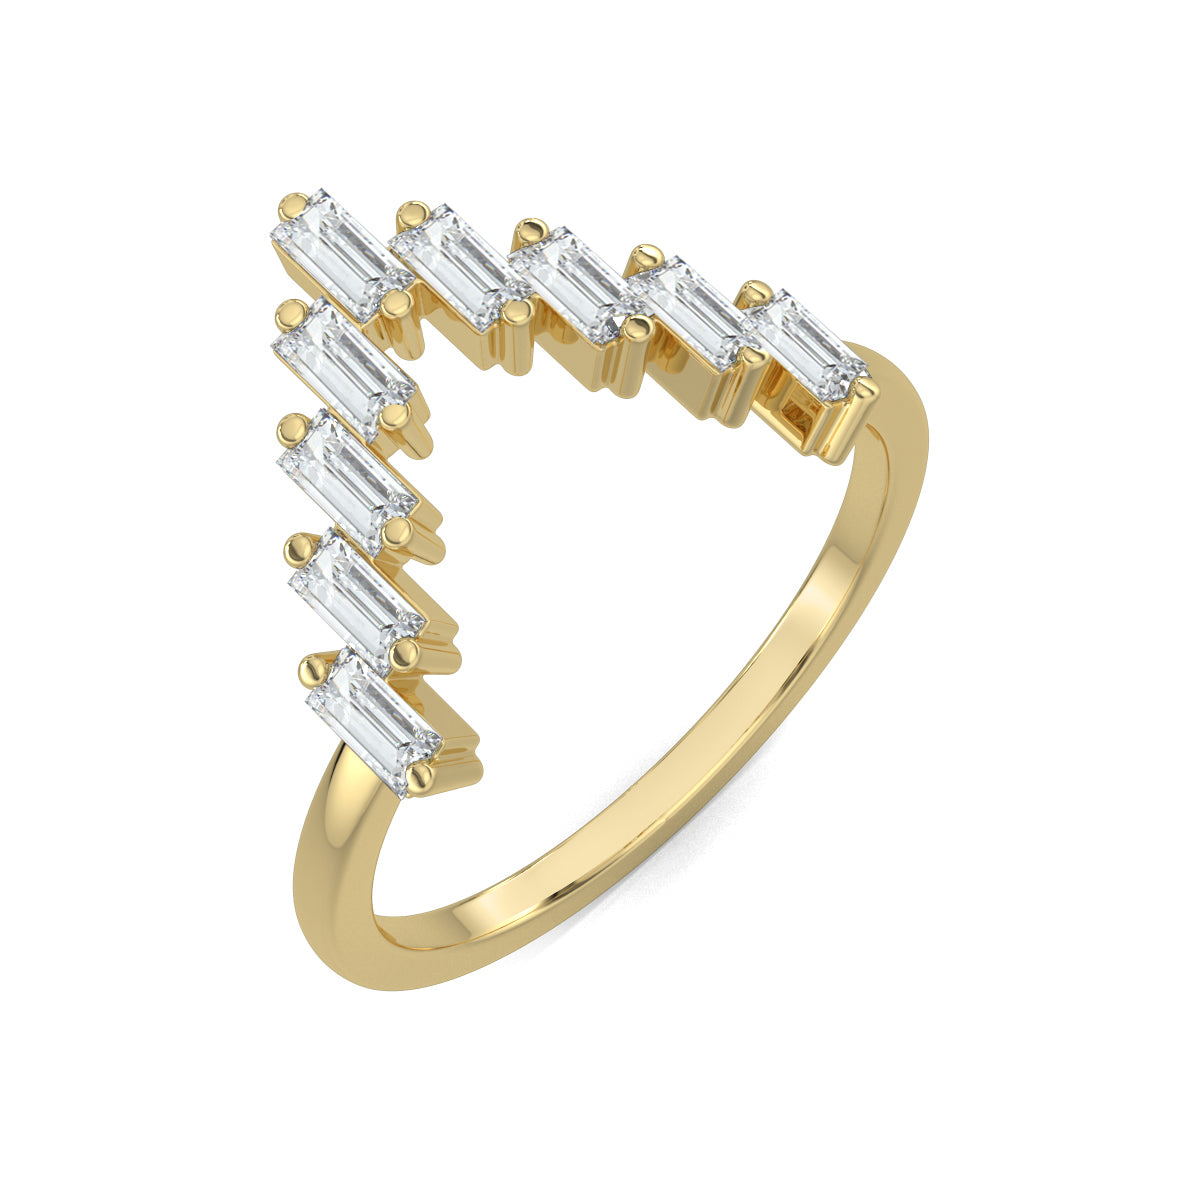 Yellow Gold, Diamond Ring, Natural diamond ring, Lab-grown diamond ring, Sovereign crown ring, Regal diamond jewelry, Baguette diamond ring, Everyday luxury ring, Sustainable diamond band, Classic elegance ring, Eco-friendly diamond jewelry